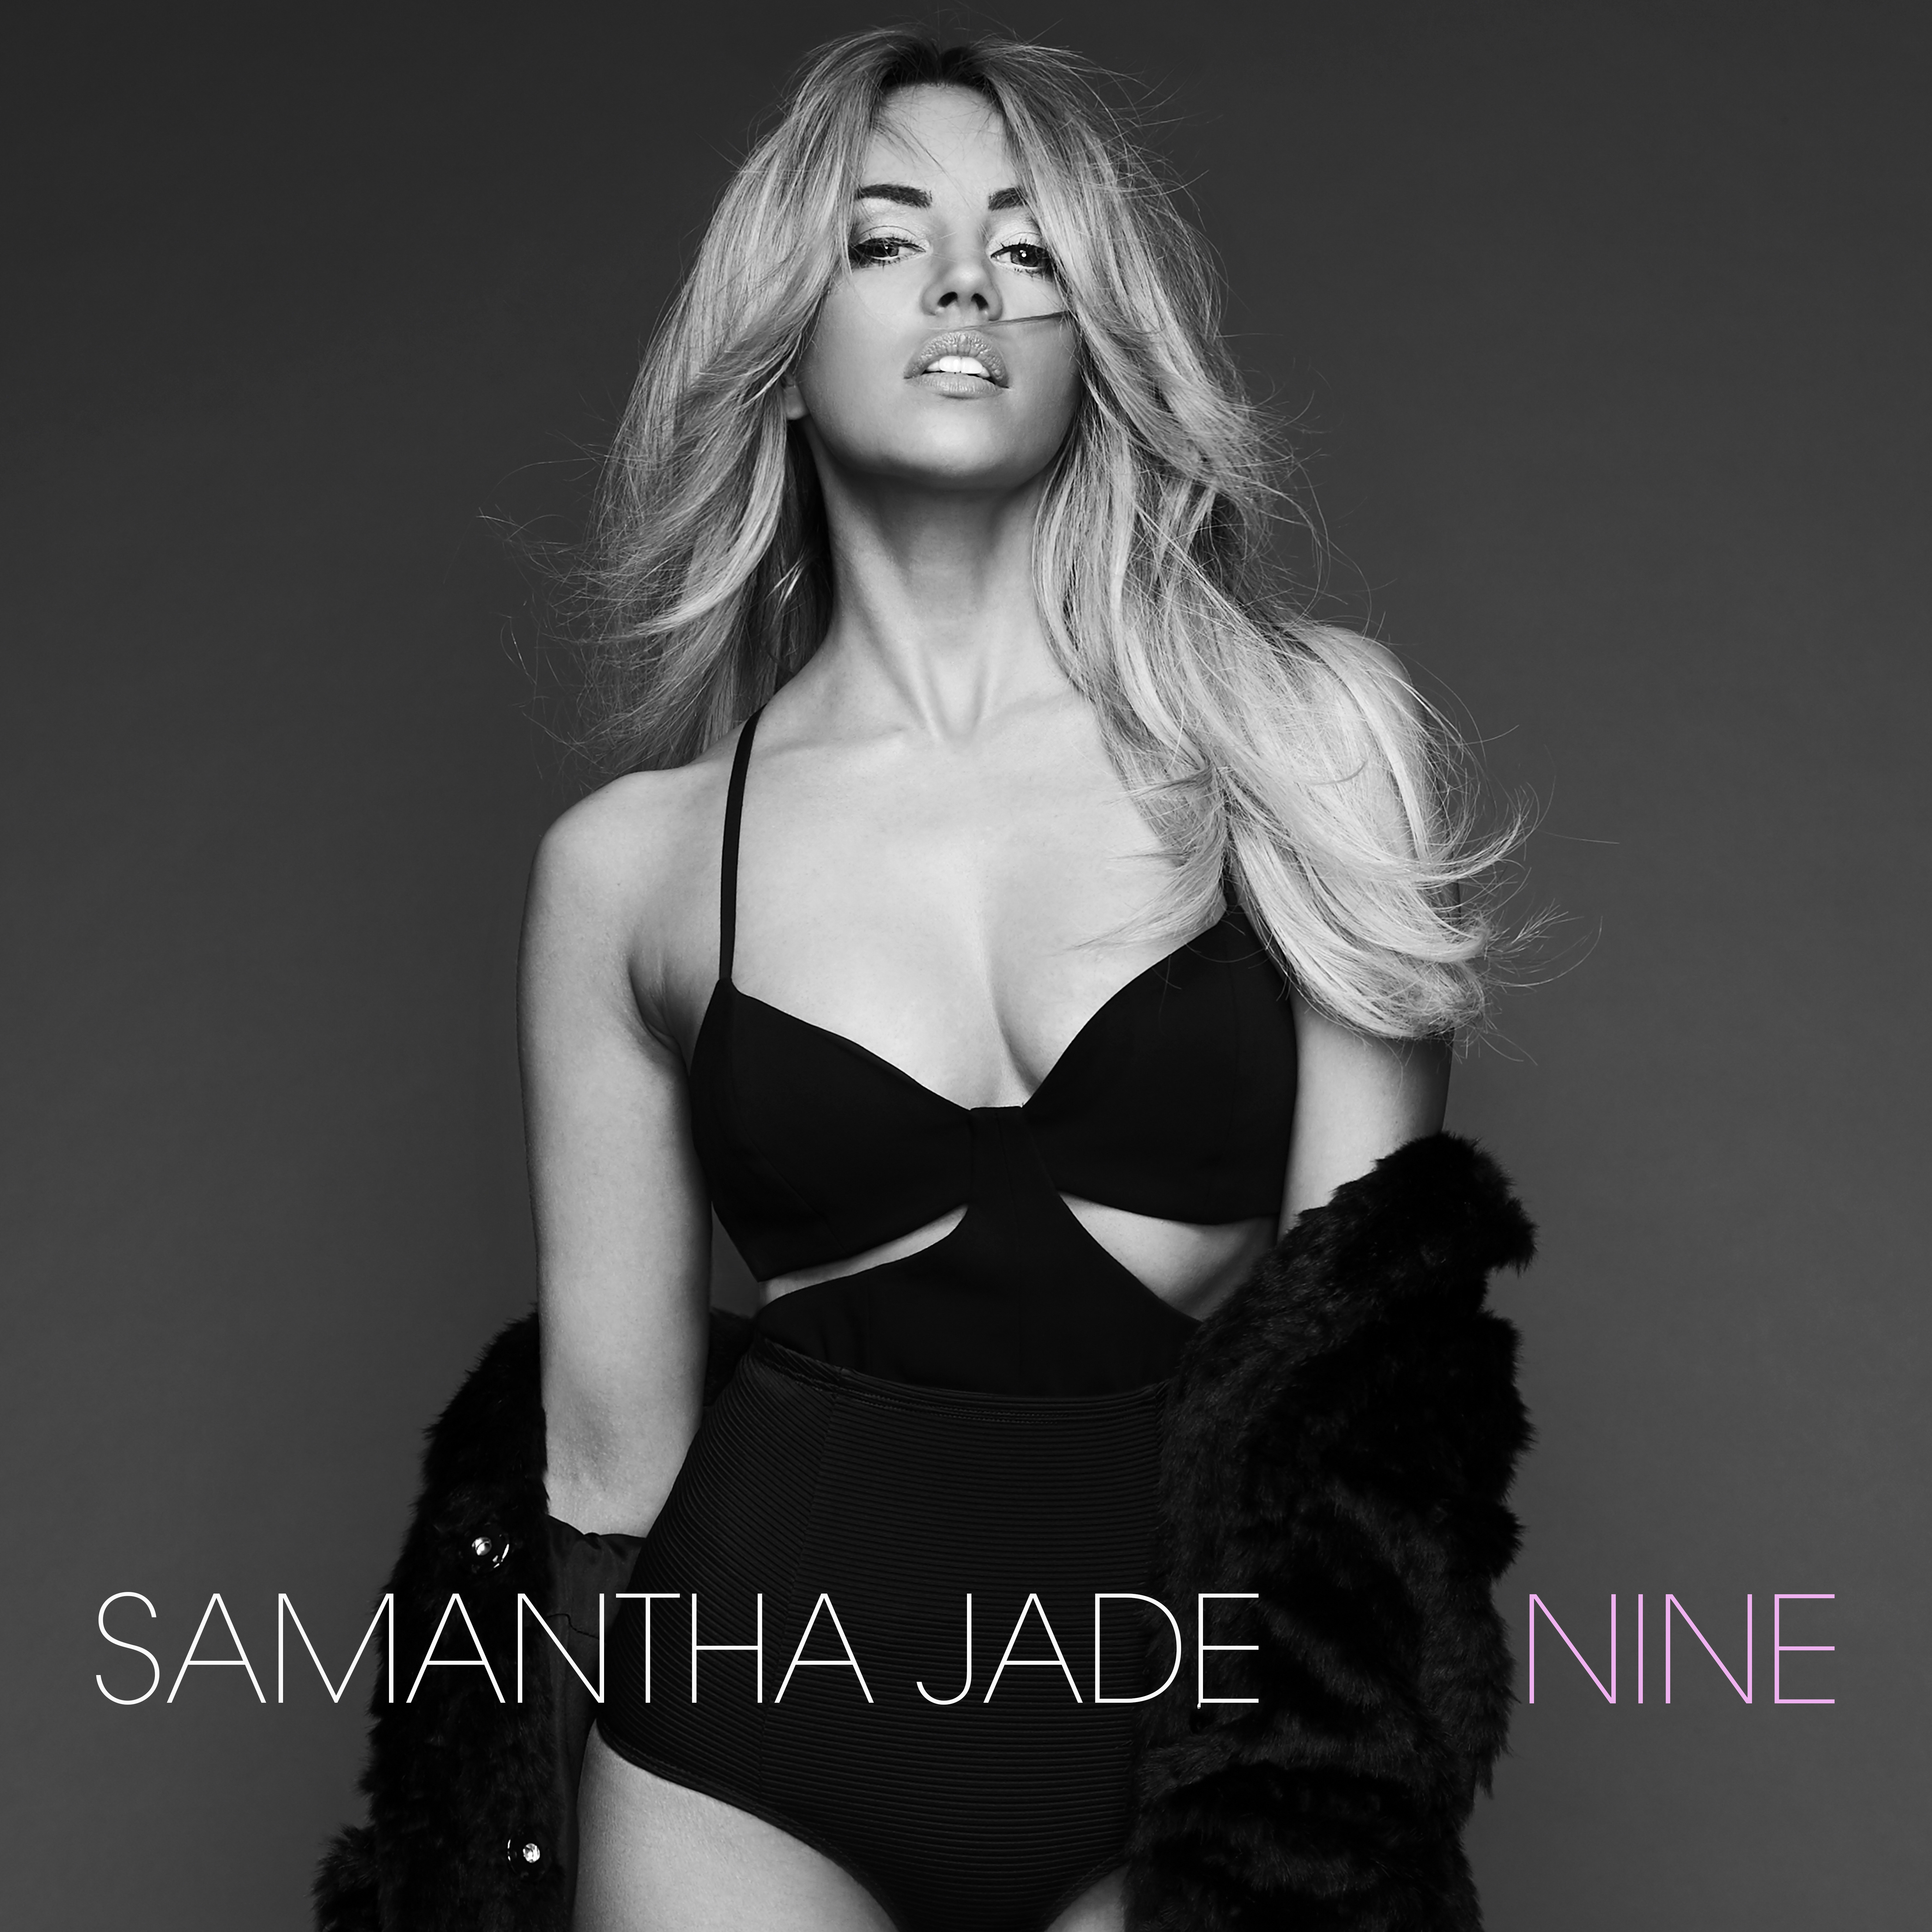 Samantha Jade Nine Cover wFont